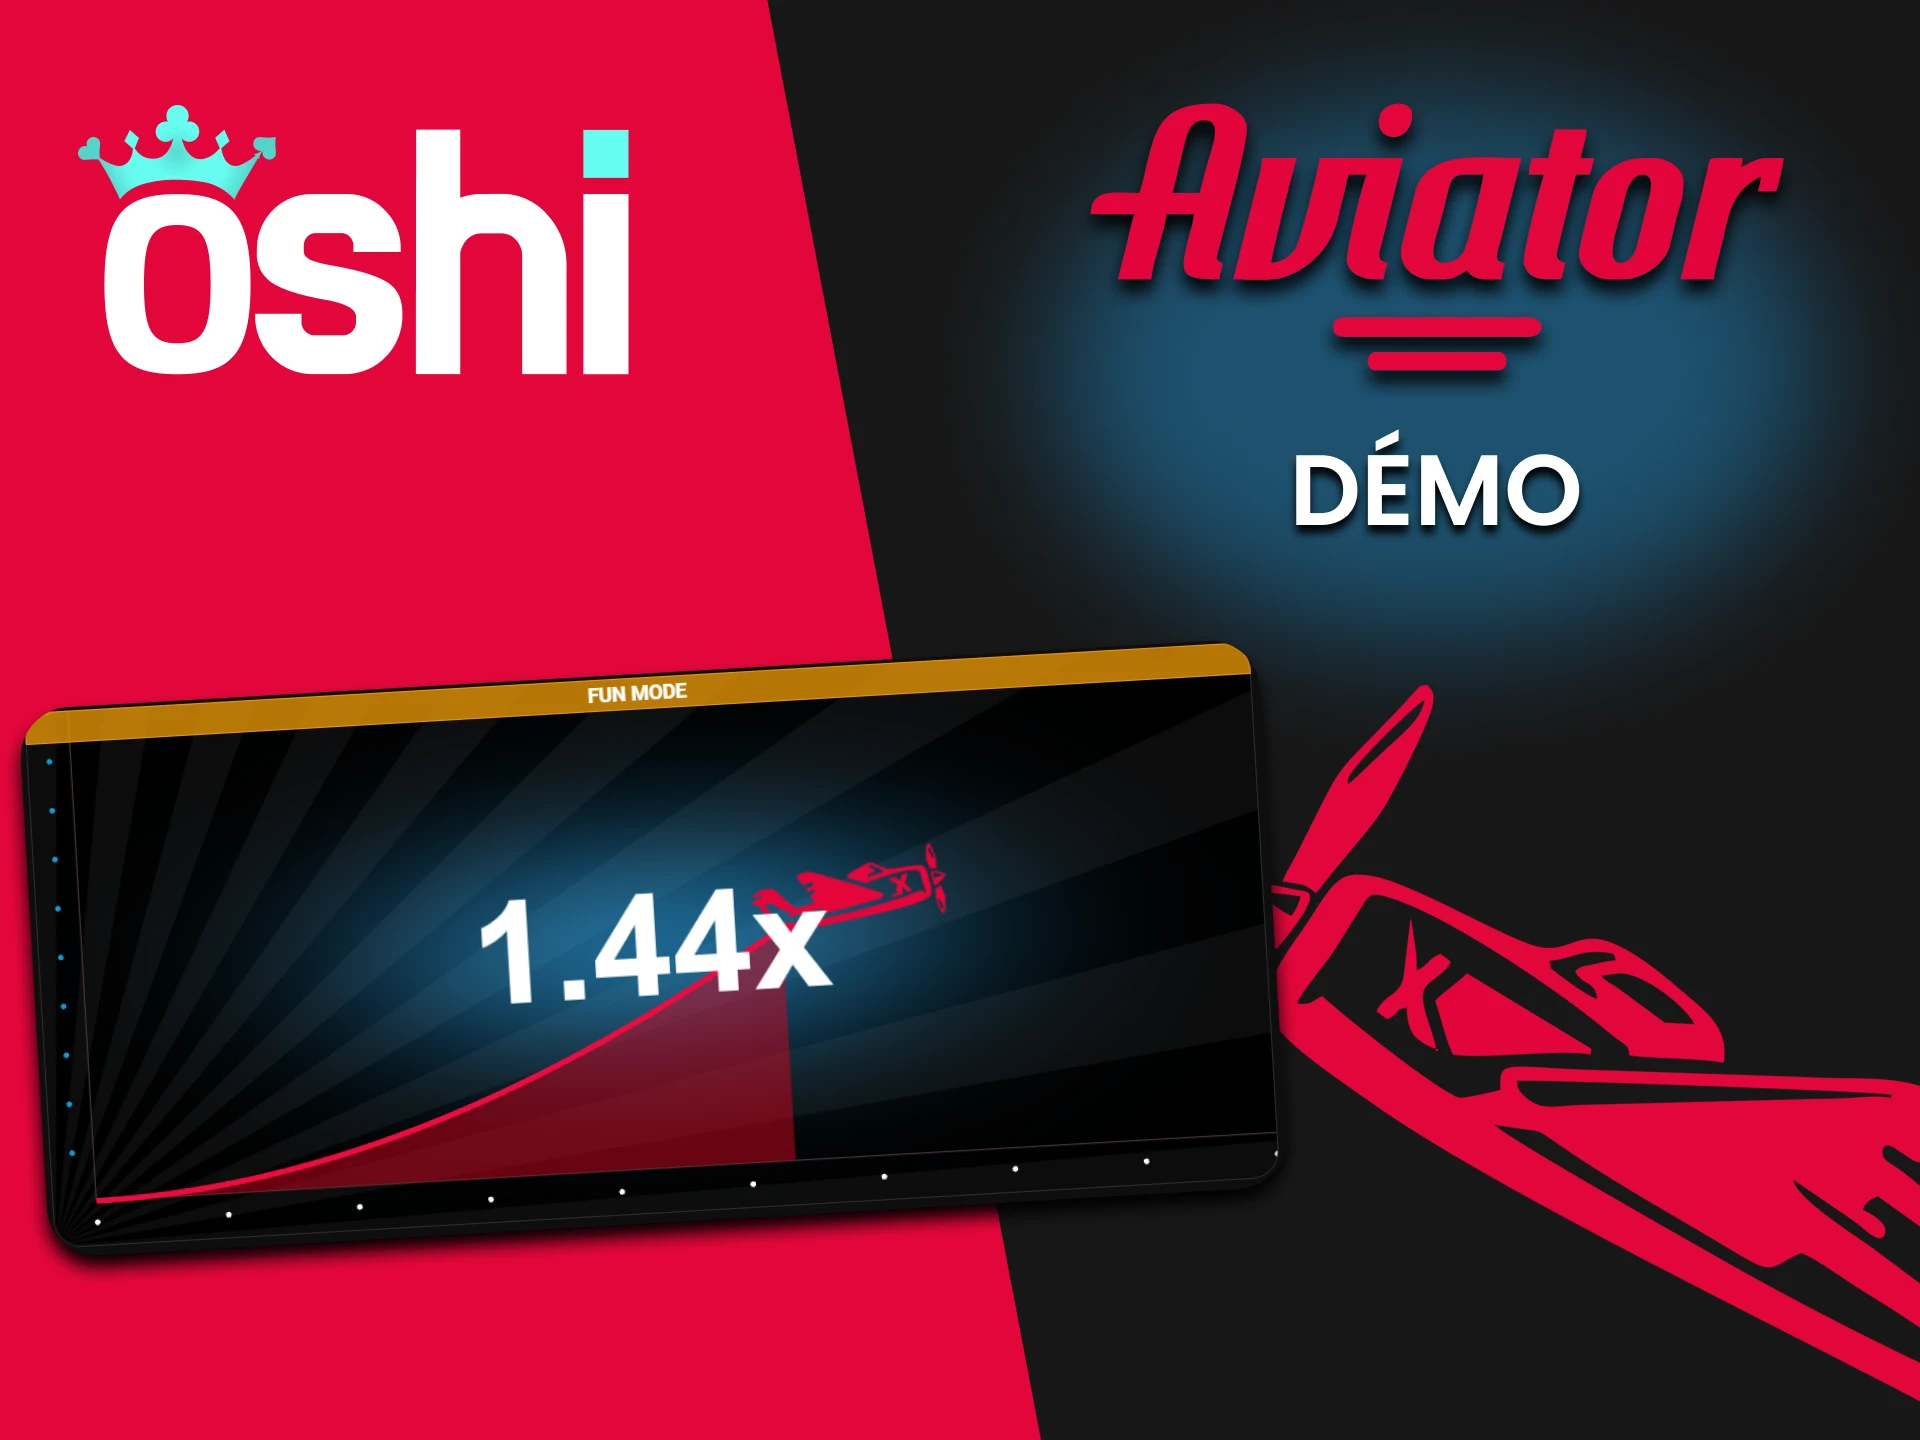 Oshi Casino propose une version démo du jeu Aviator.